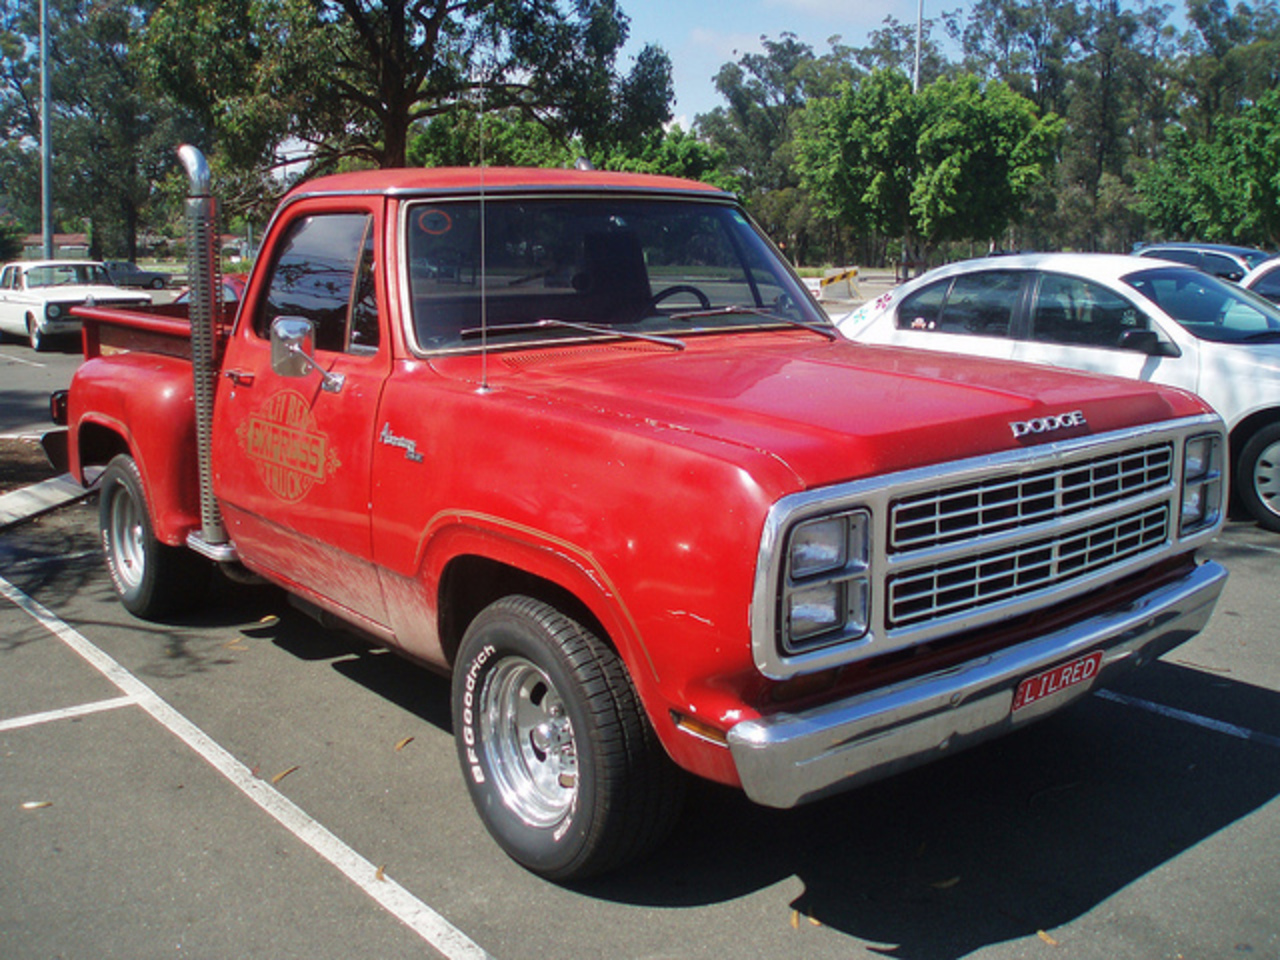 1979 Dodge Adventurer 150 "Li'l Red Express Truck" pick up